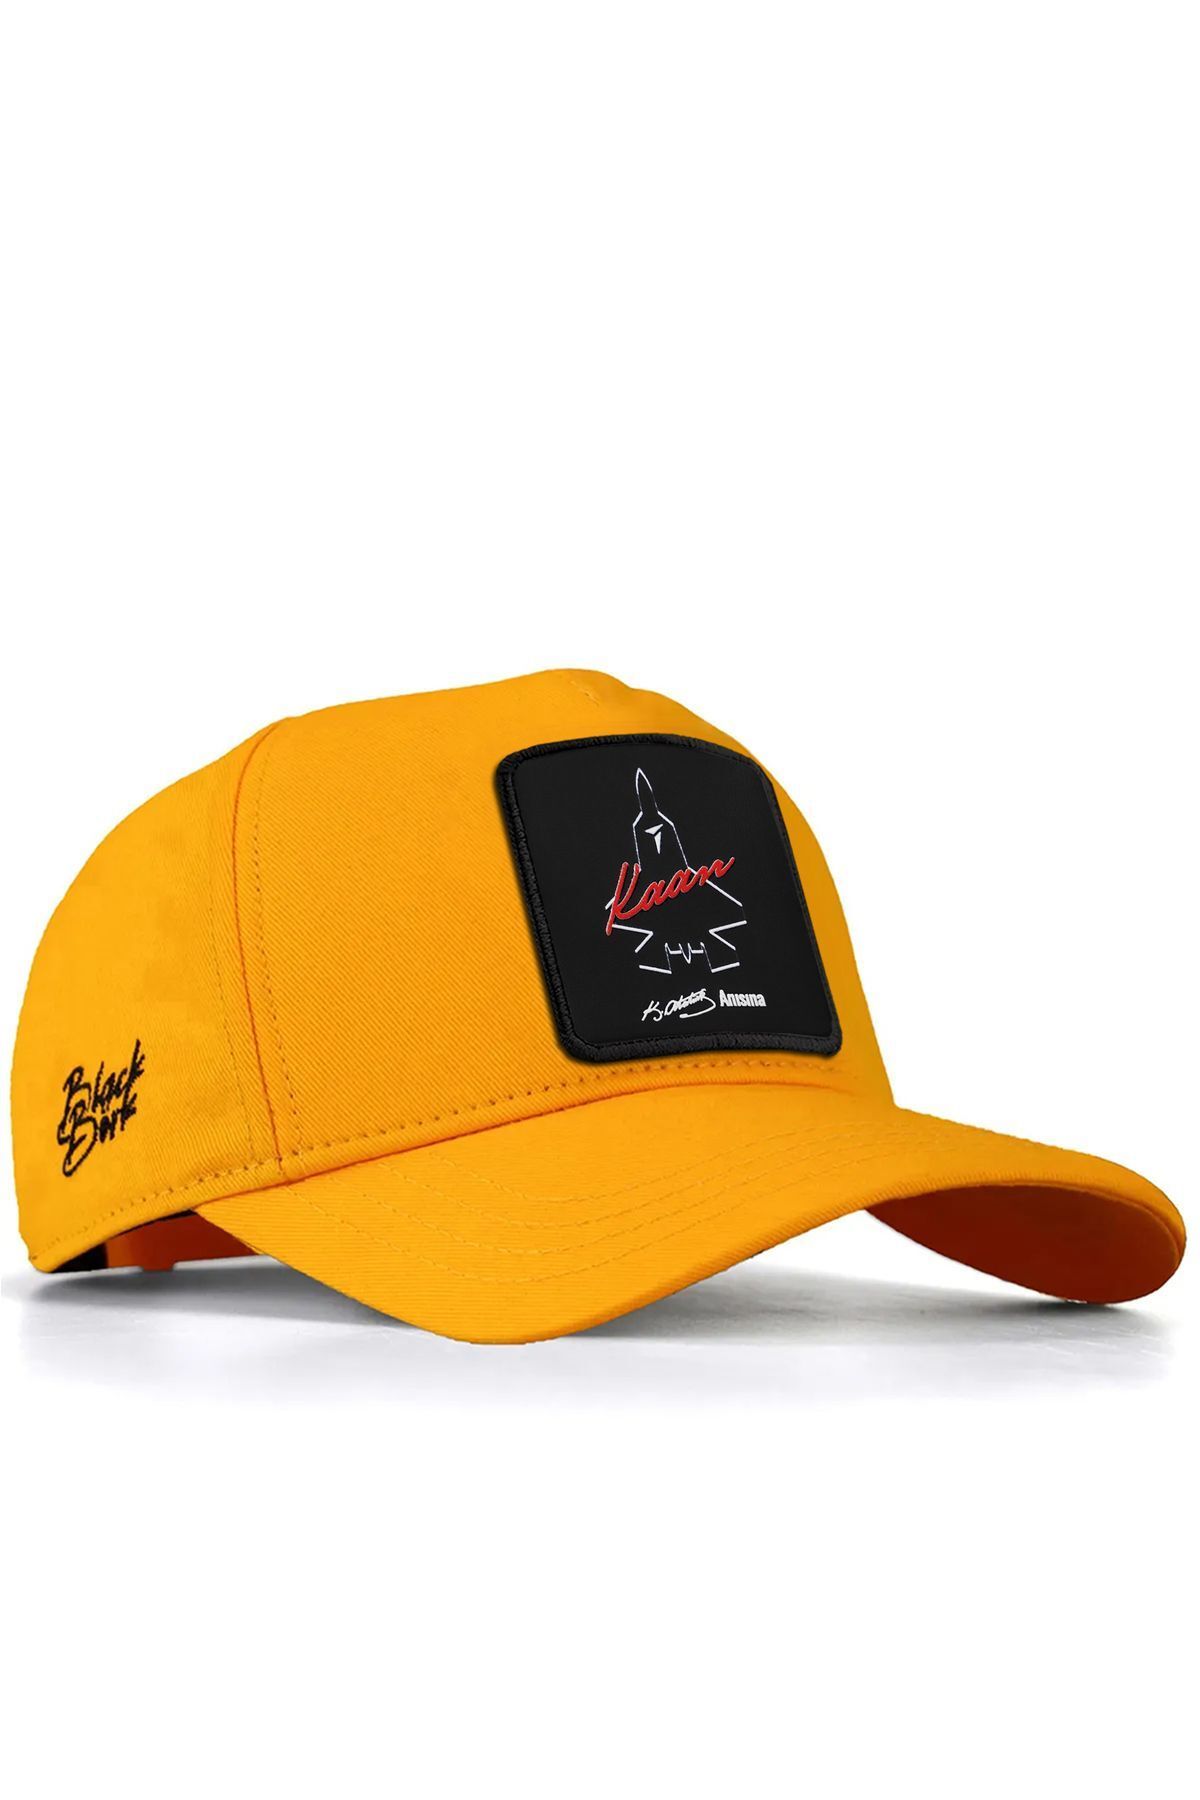 BlackBörk V1 Baseball Saygı - 2 Kaan Lisanlı Sarı Şapka